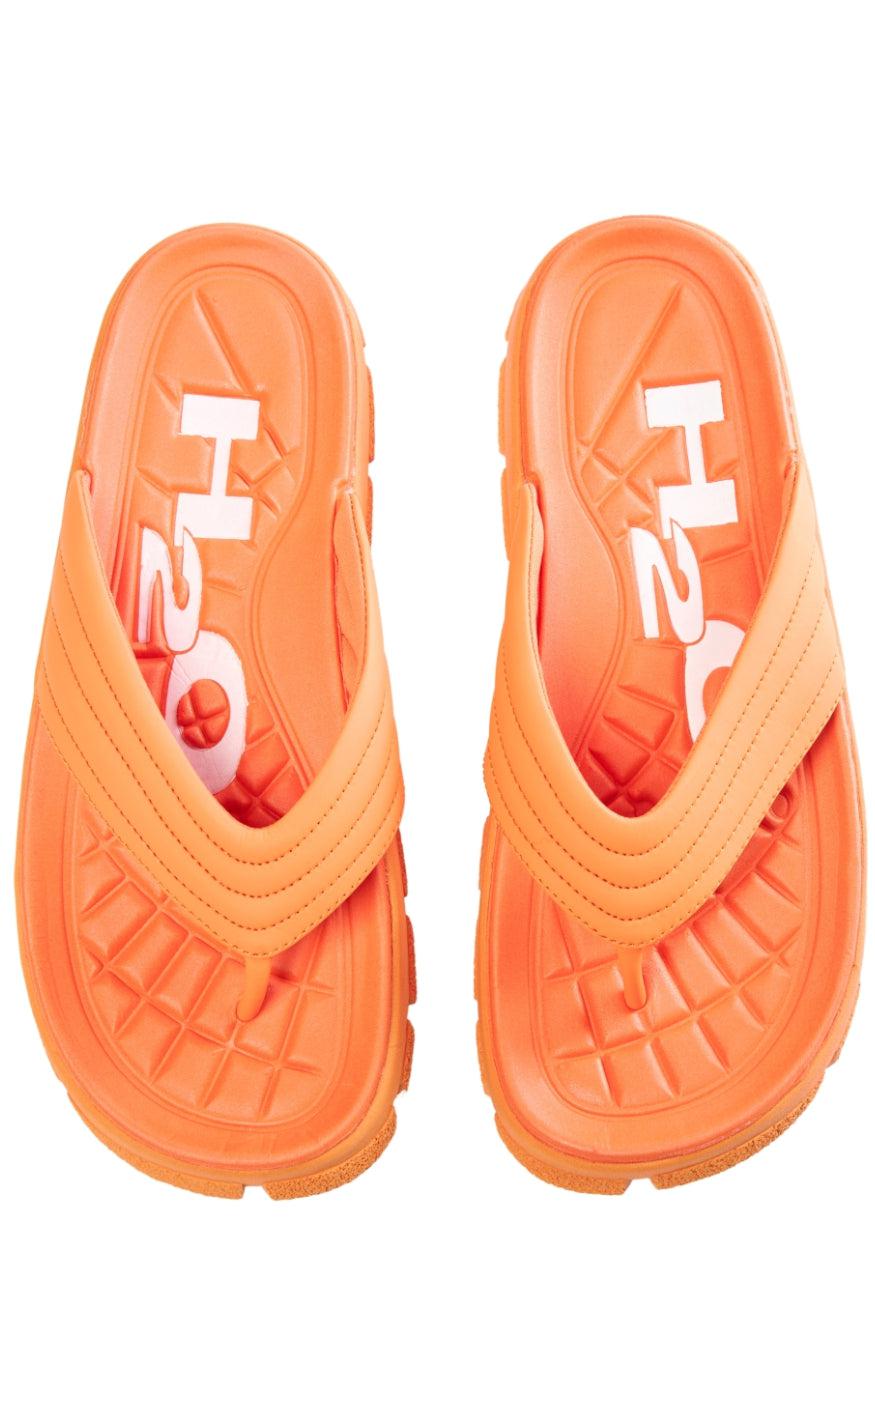 Image of H2O Sandal - Trek Flip - Orange